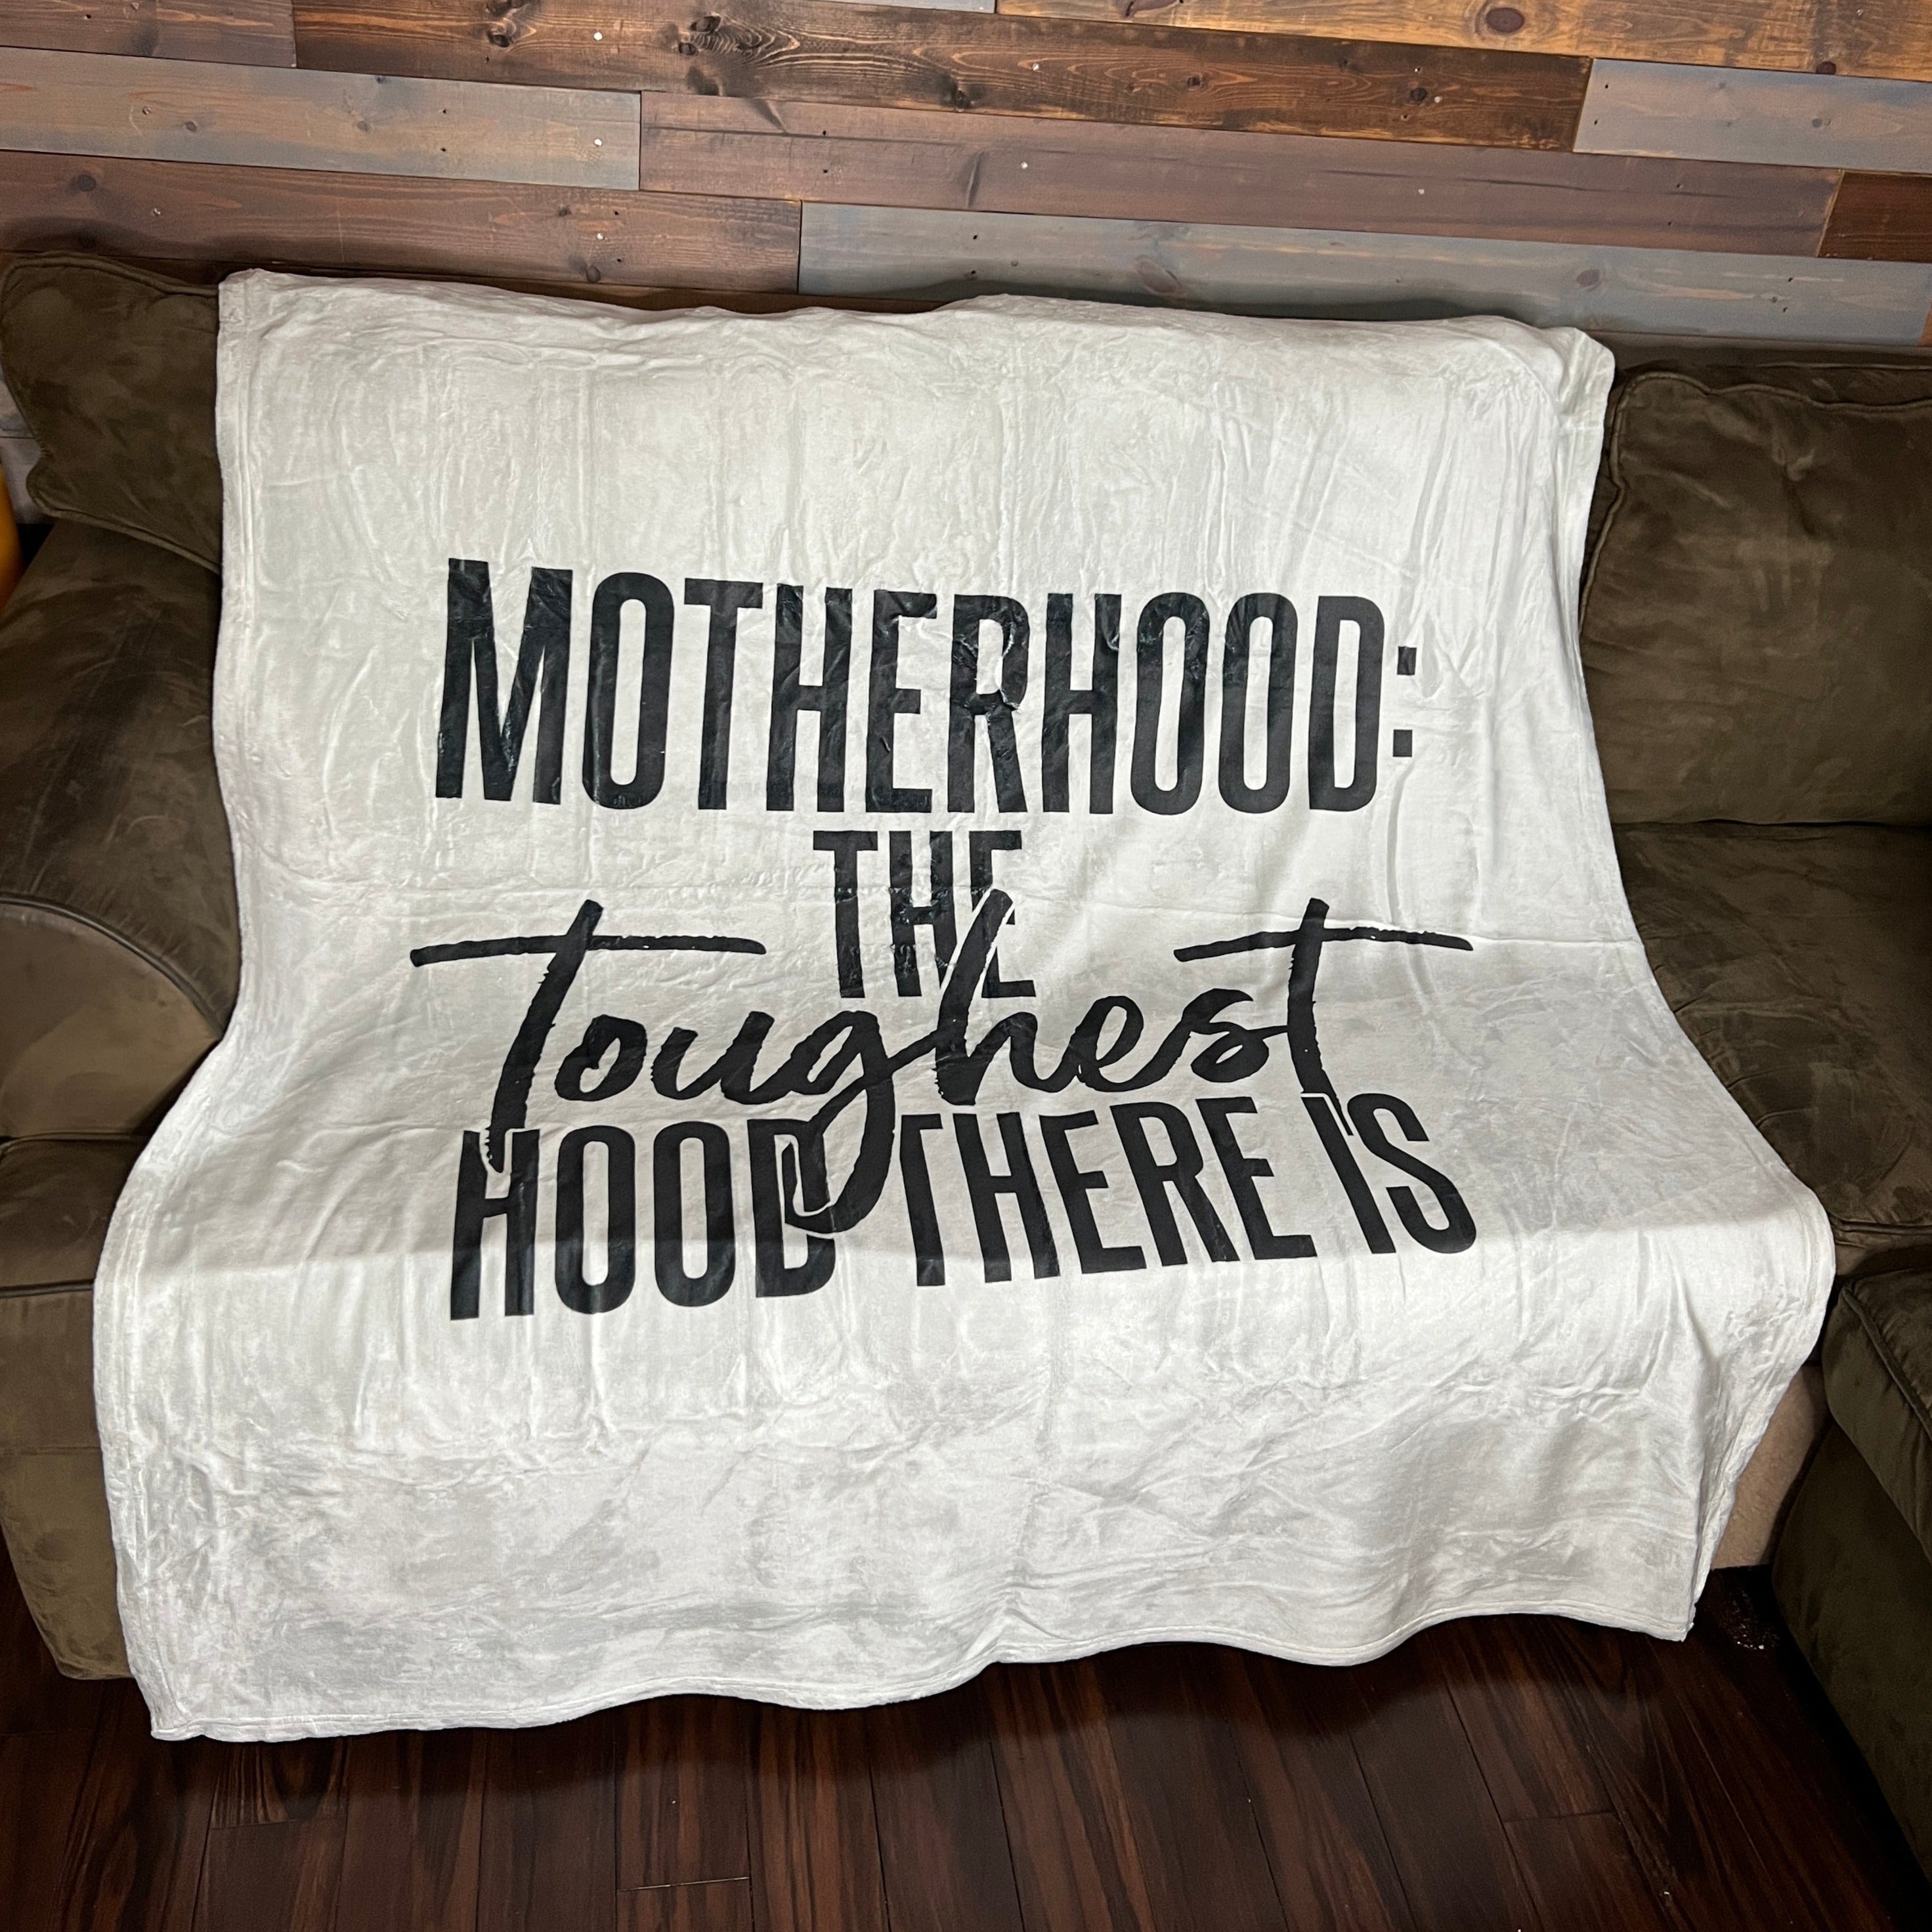 Motherhood Toughest Hood couch throw blanket for moms